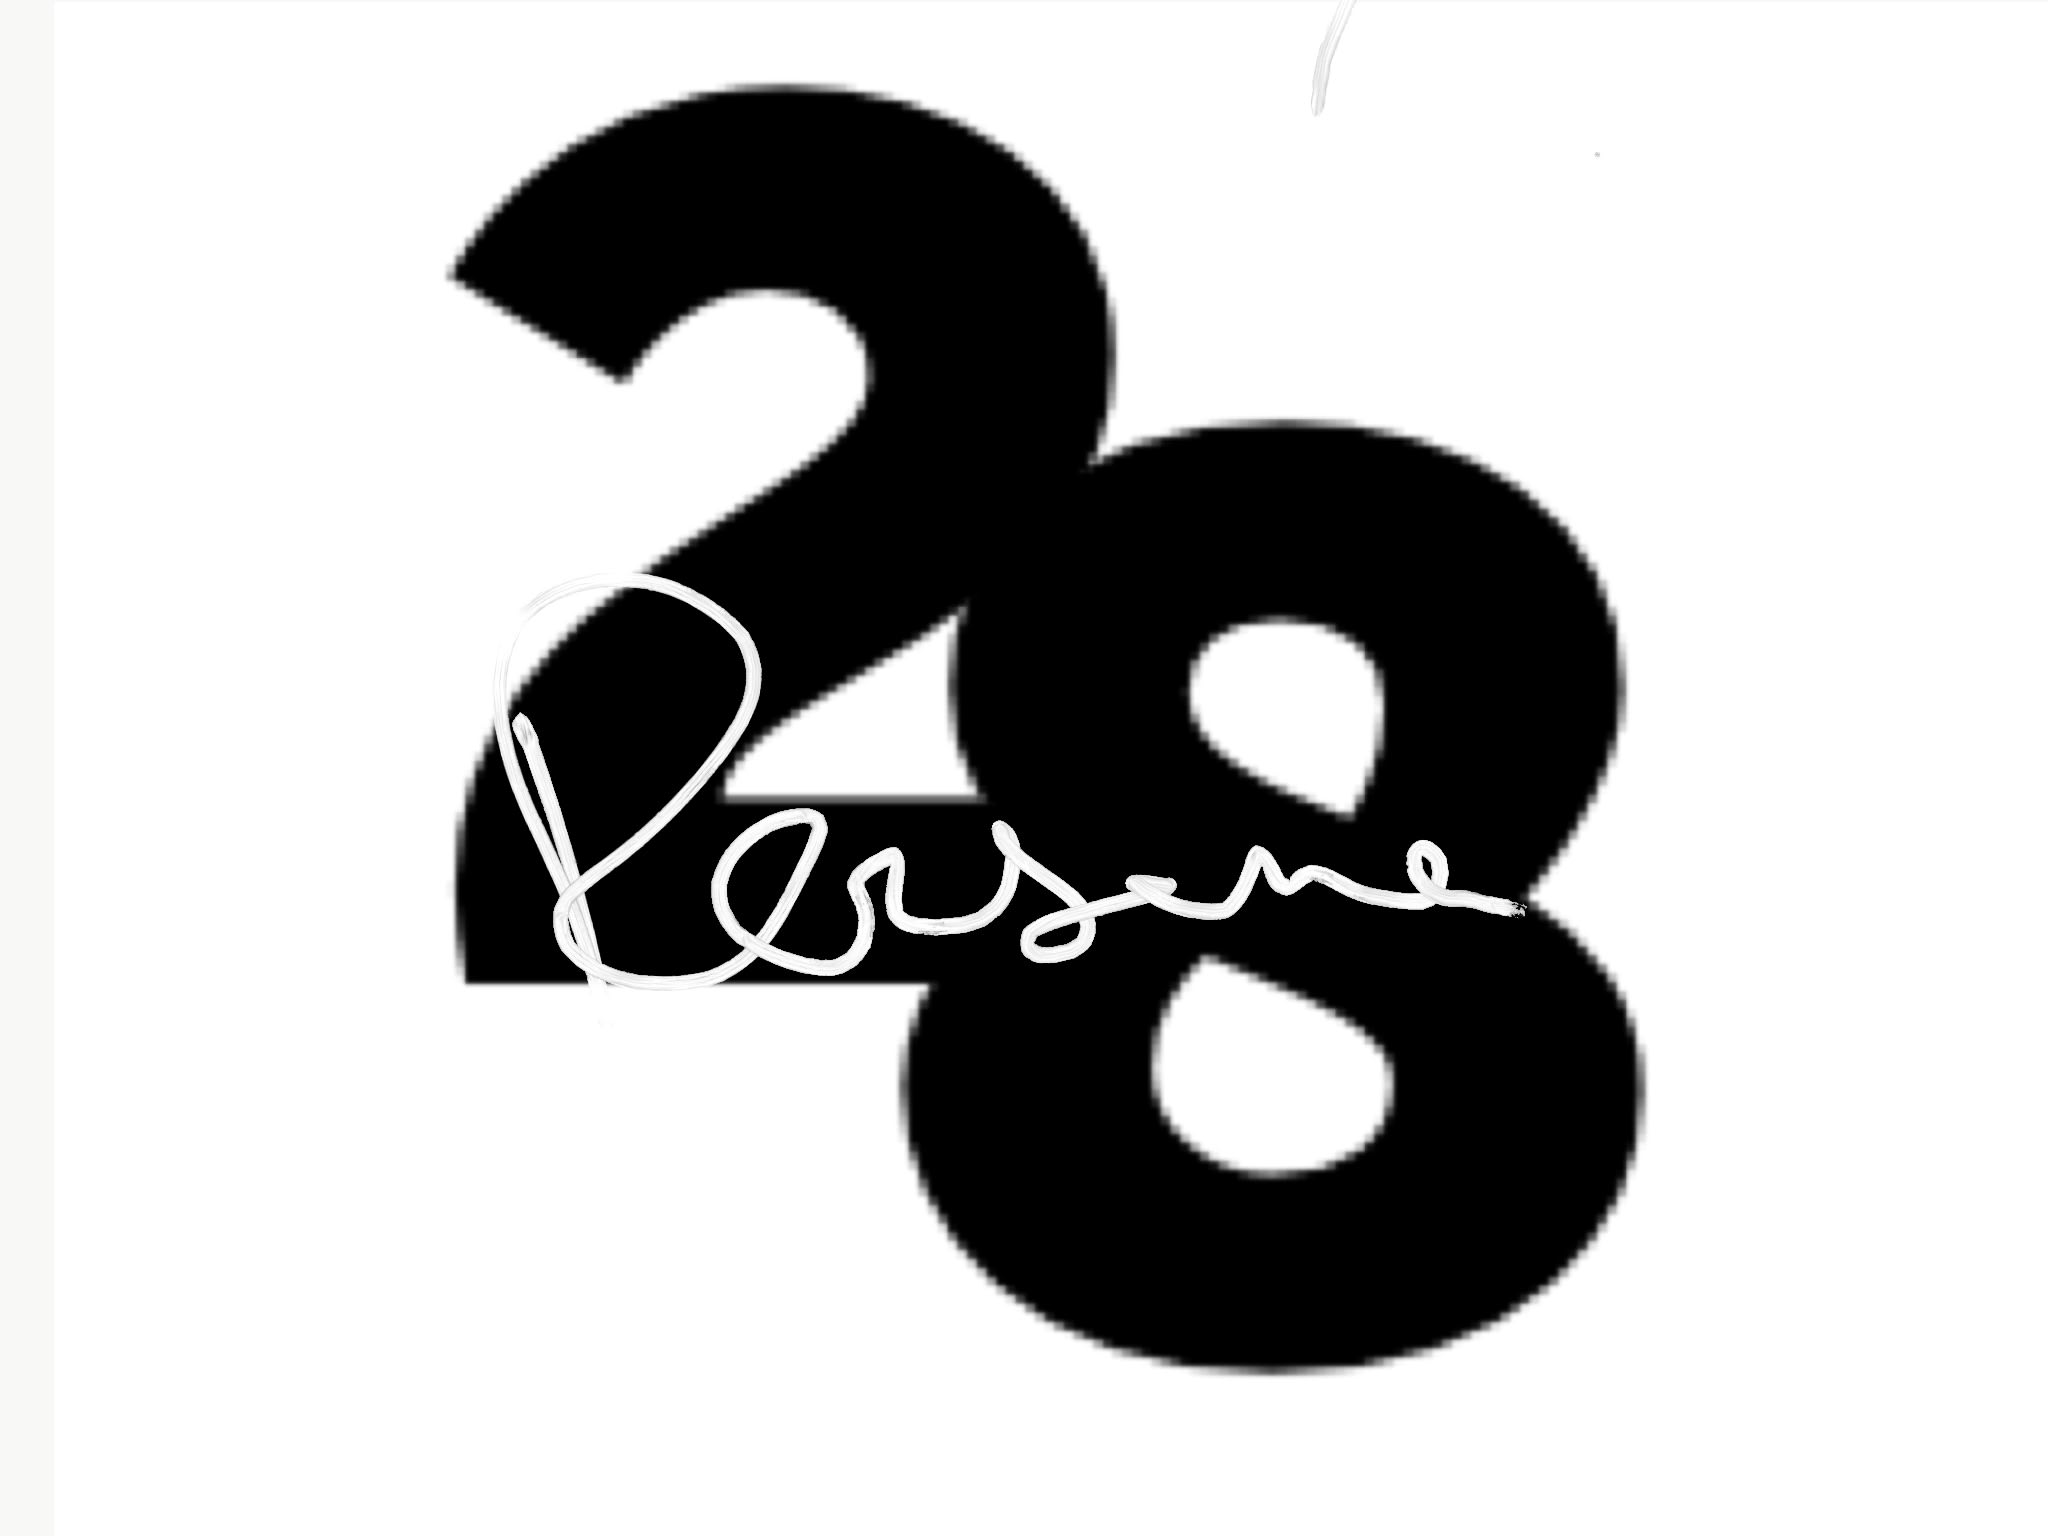 28 Persona LLC